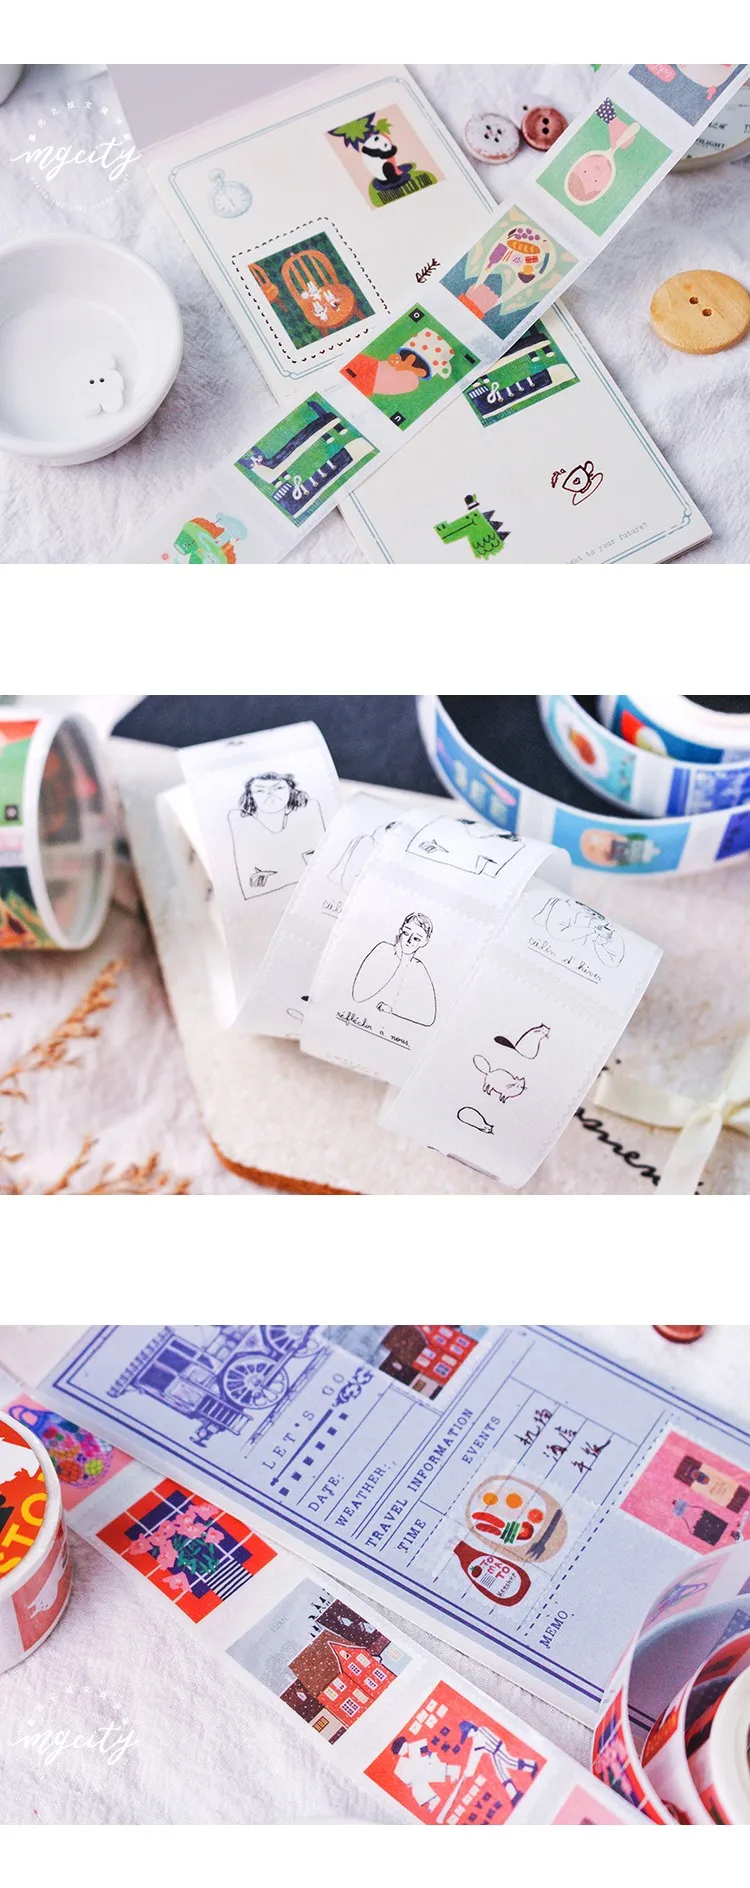 Kawaii Mini Stamp Bullet Journal васи клейкая лента декоративная клейкая лента DIY Скрапбукинг наклейка этикетка японские канцелярские принадлежности